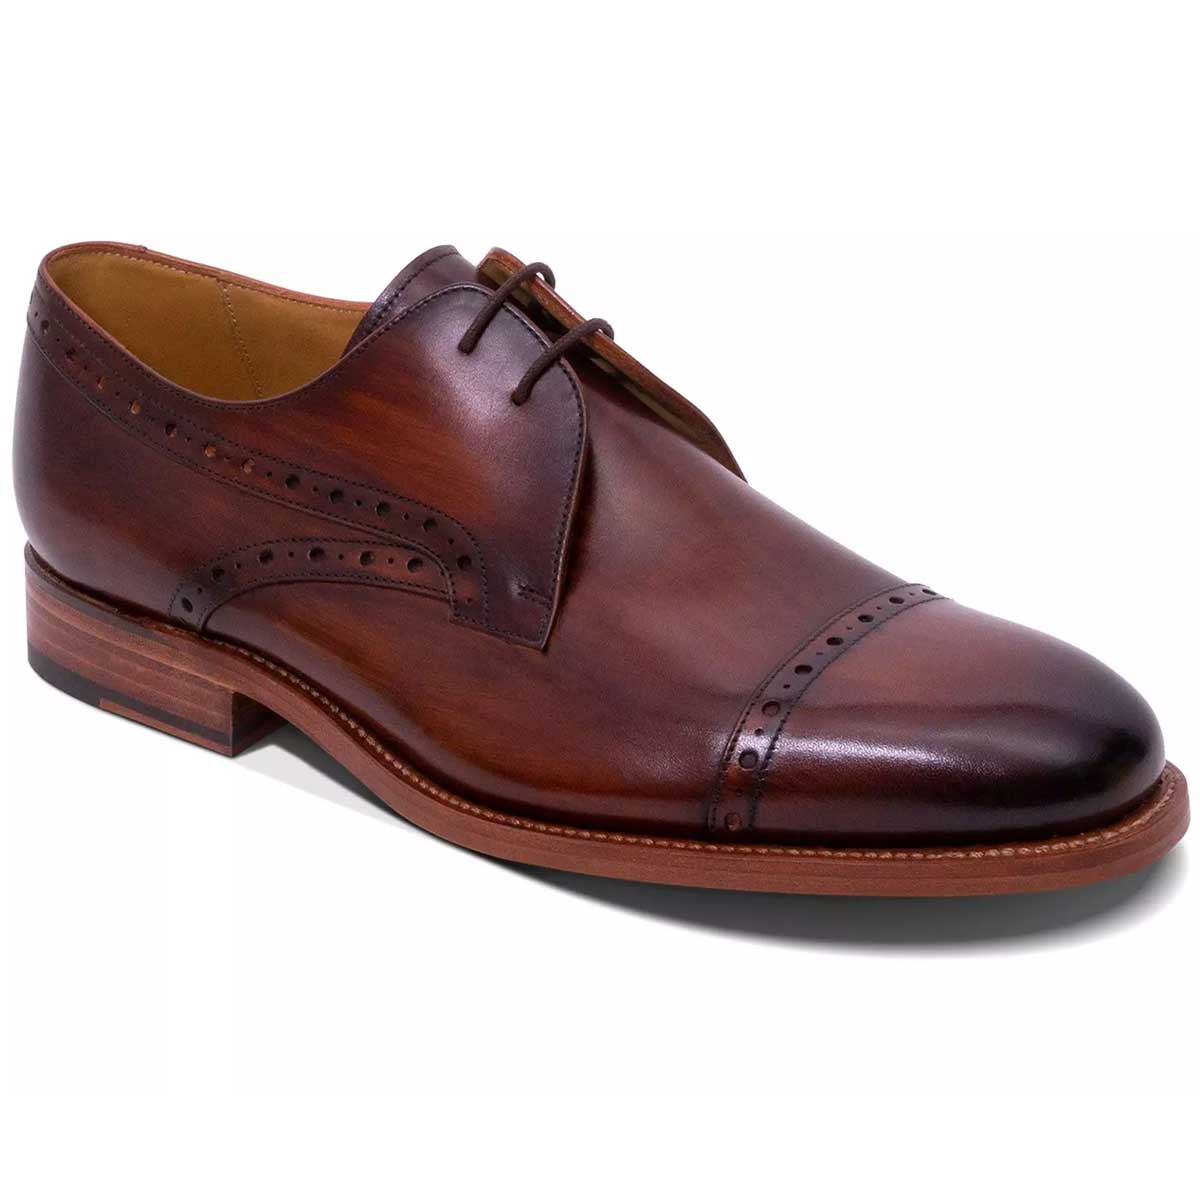 BARKER Wye Shoes - Mens Derby - Hand Brushed Brown